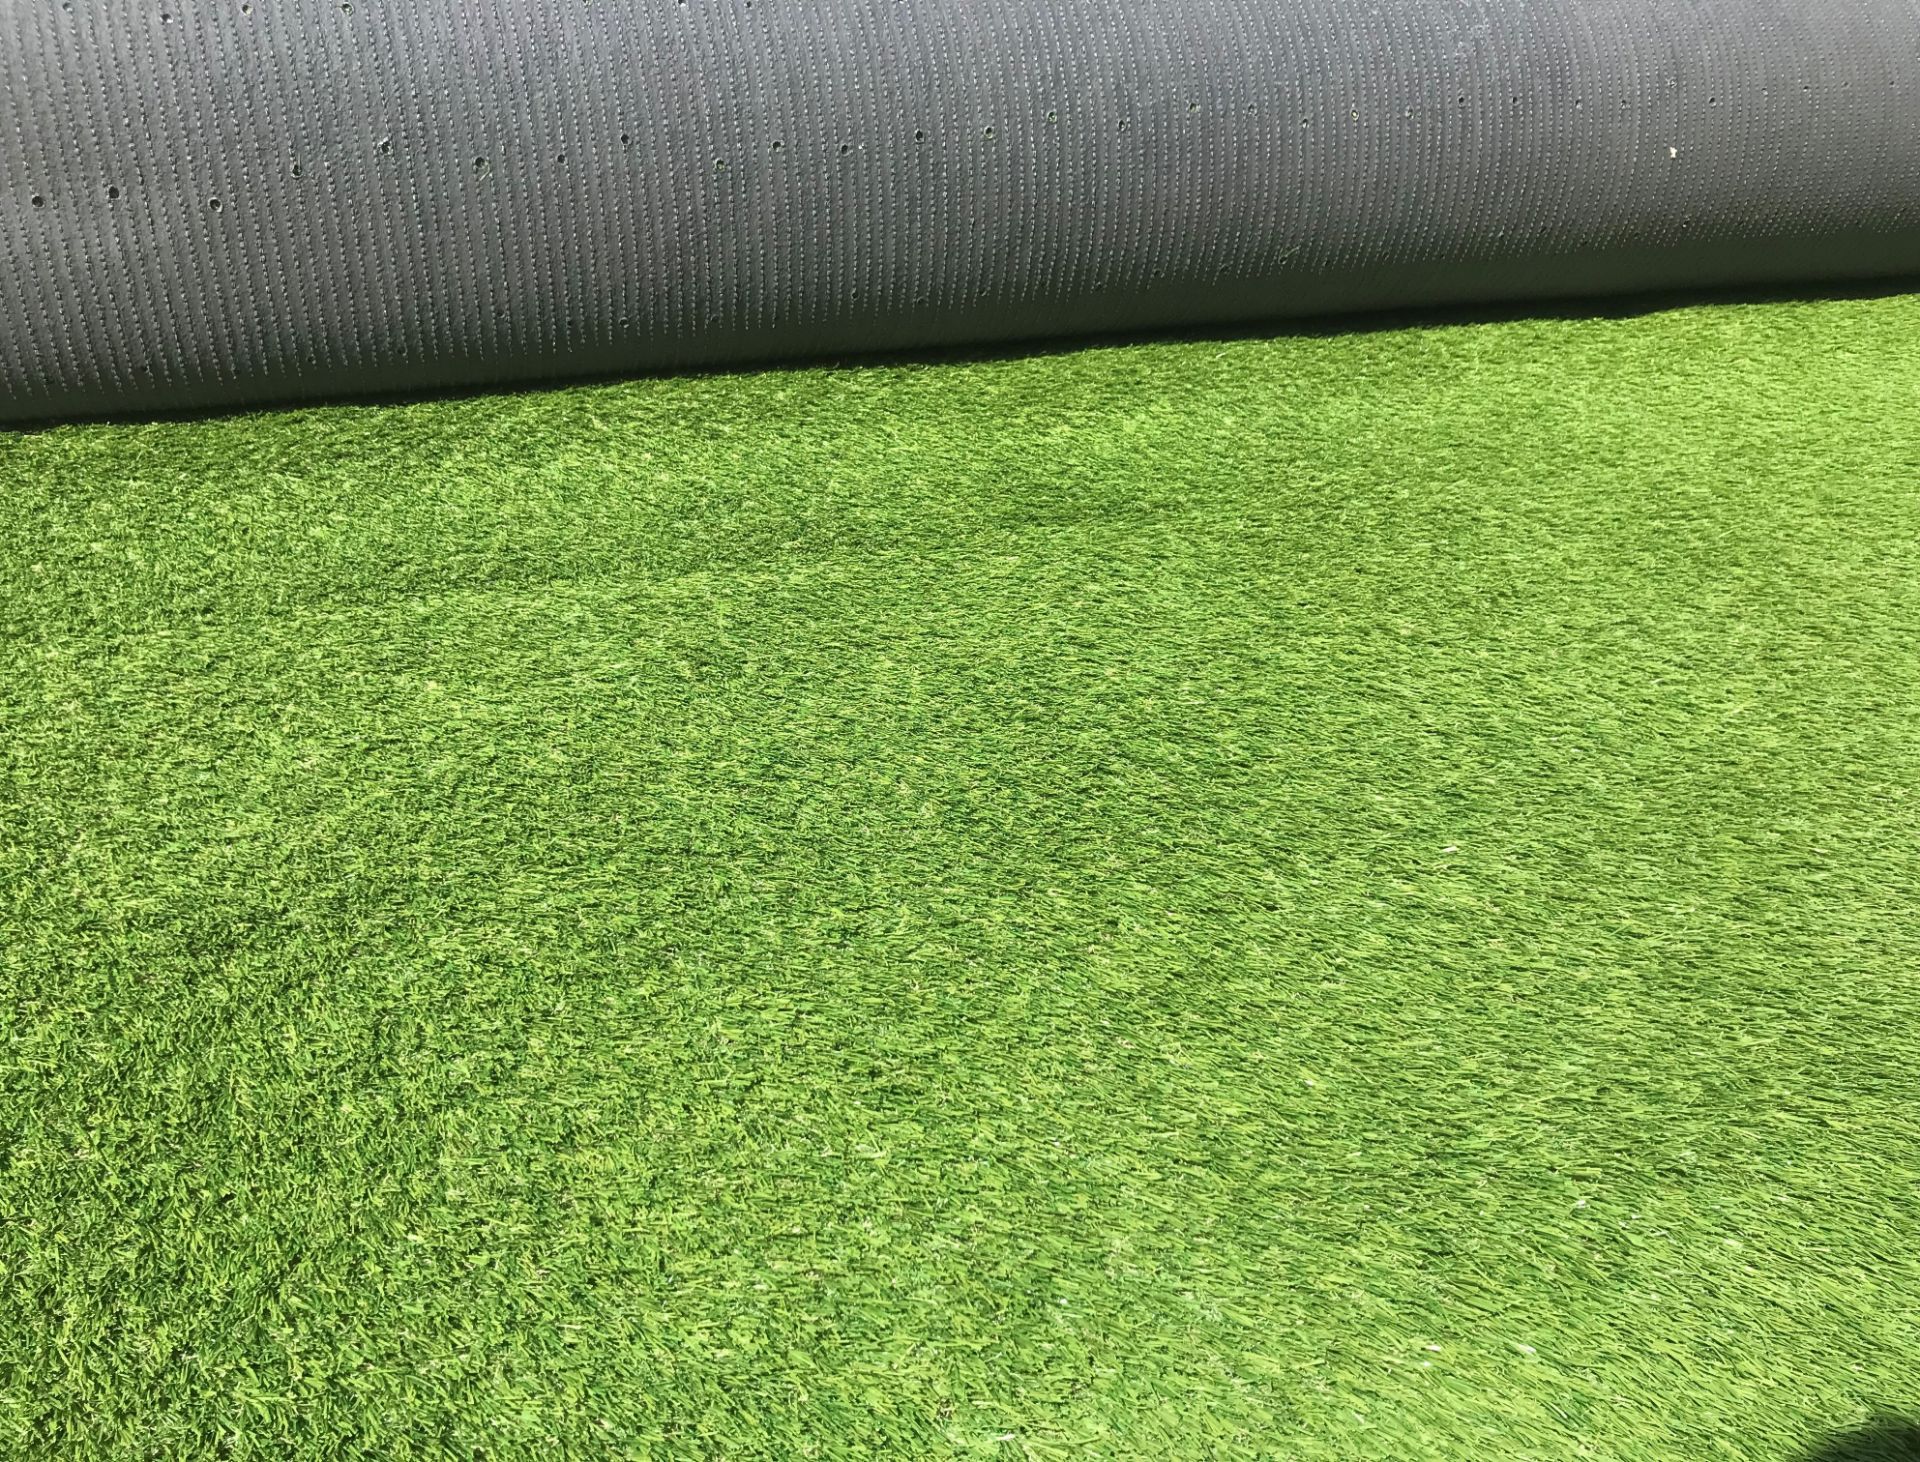 1 x Heavyweight Artificial Garden Grass - 40Mm Thick - 17.5X5M Roll - Rrp £32.99 Per Square